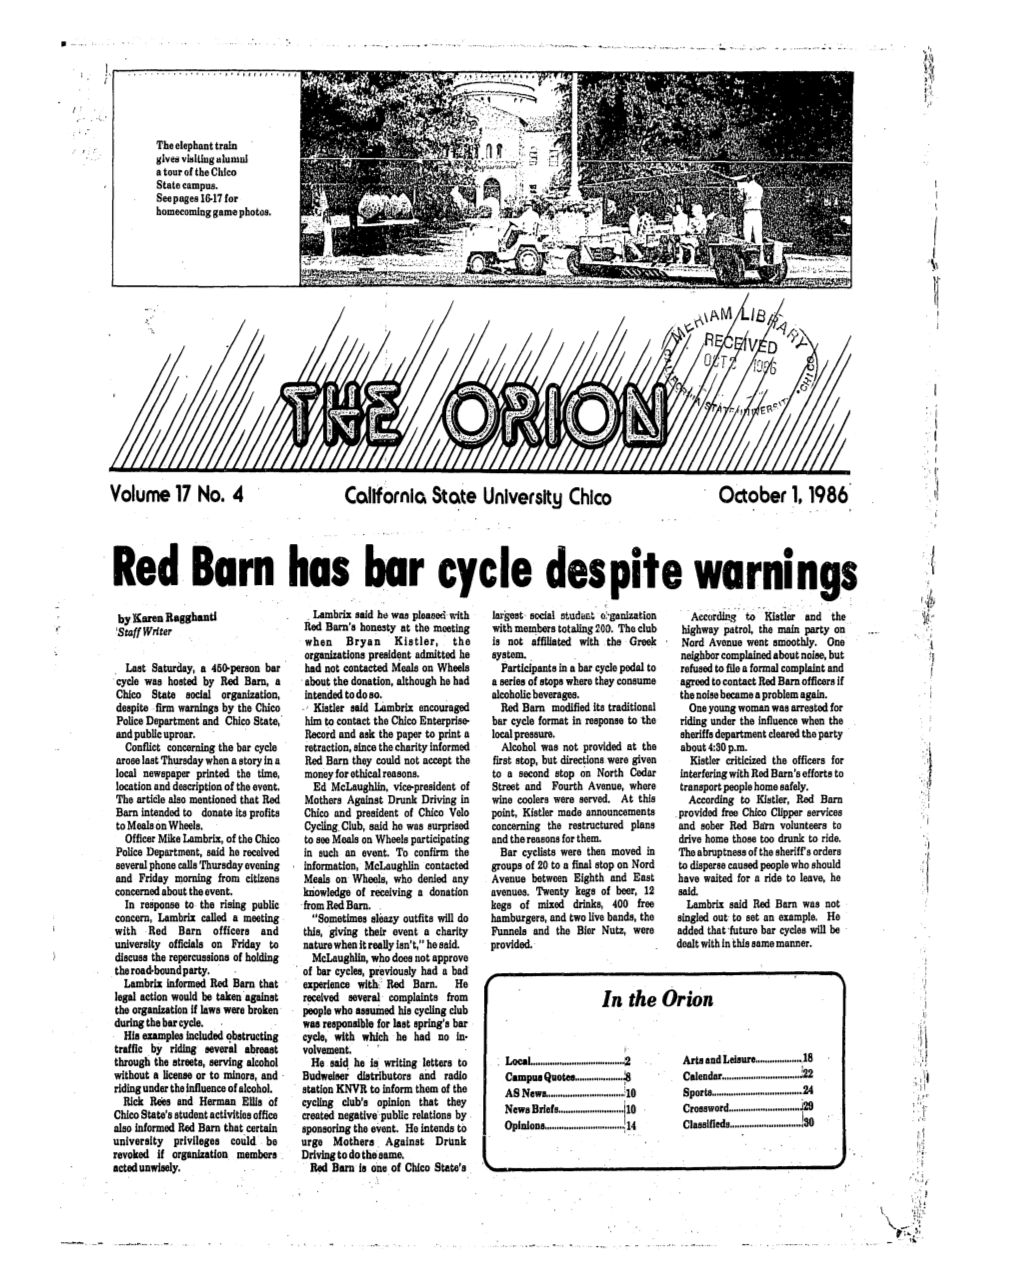 Red Barn Has Bar Cycle Despite Warnings ,{ , by Kcart'ld Ragljhanti " Lambrix /Lald Htl Willi Ploll6e& Vlith Lil1'goet Social !Itudi!Llt O:'Gilnizlltion Accordh!.~